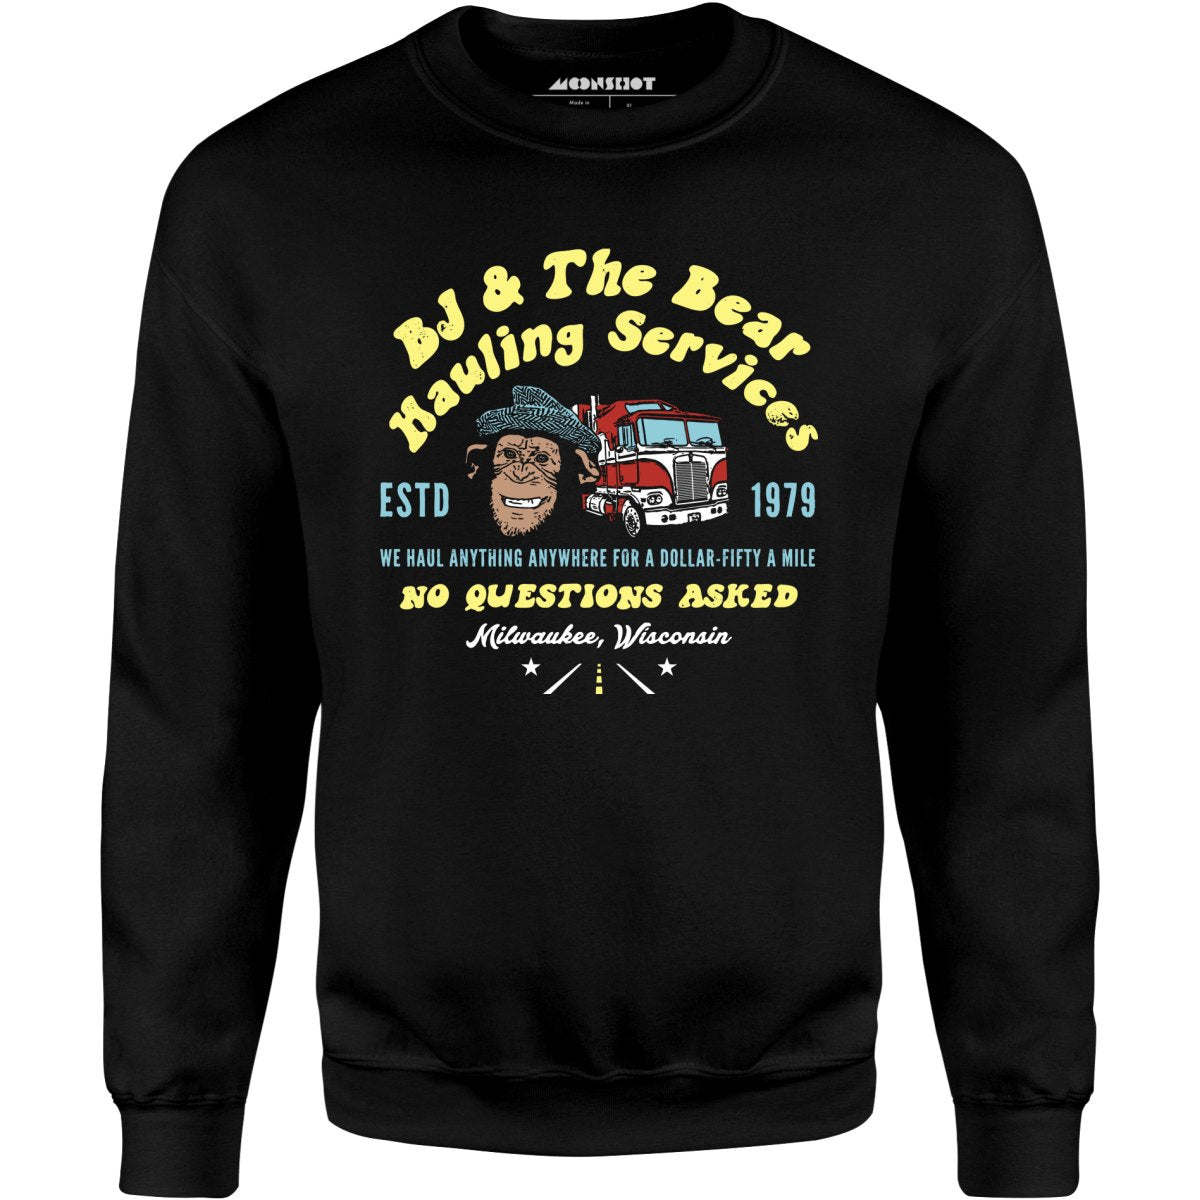 BJ & The Bear Hauling Services - Unisex Sweatshirt